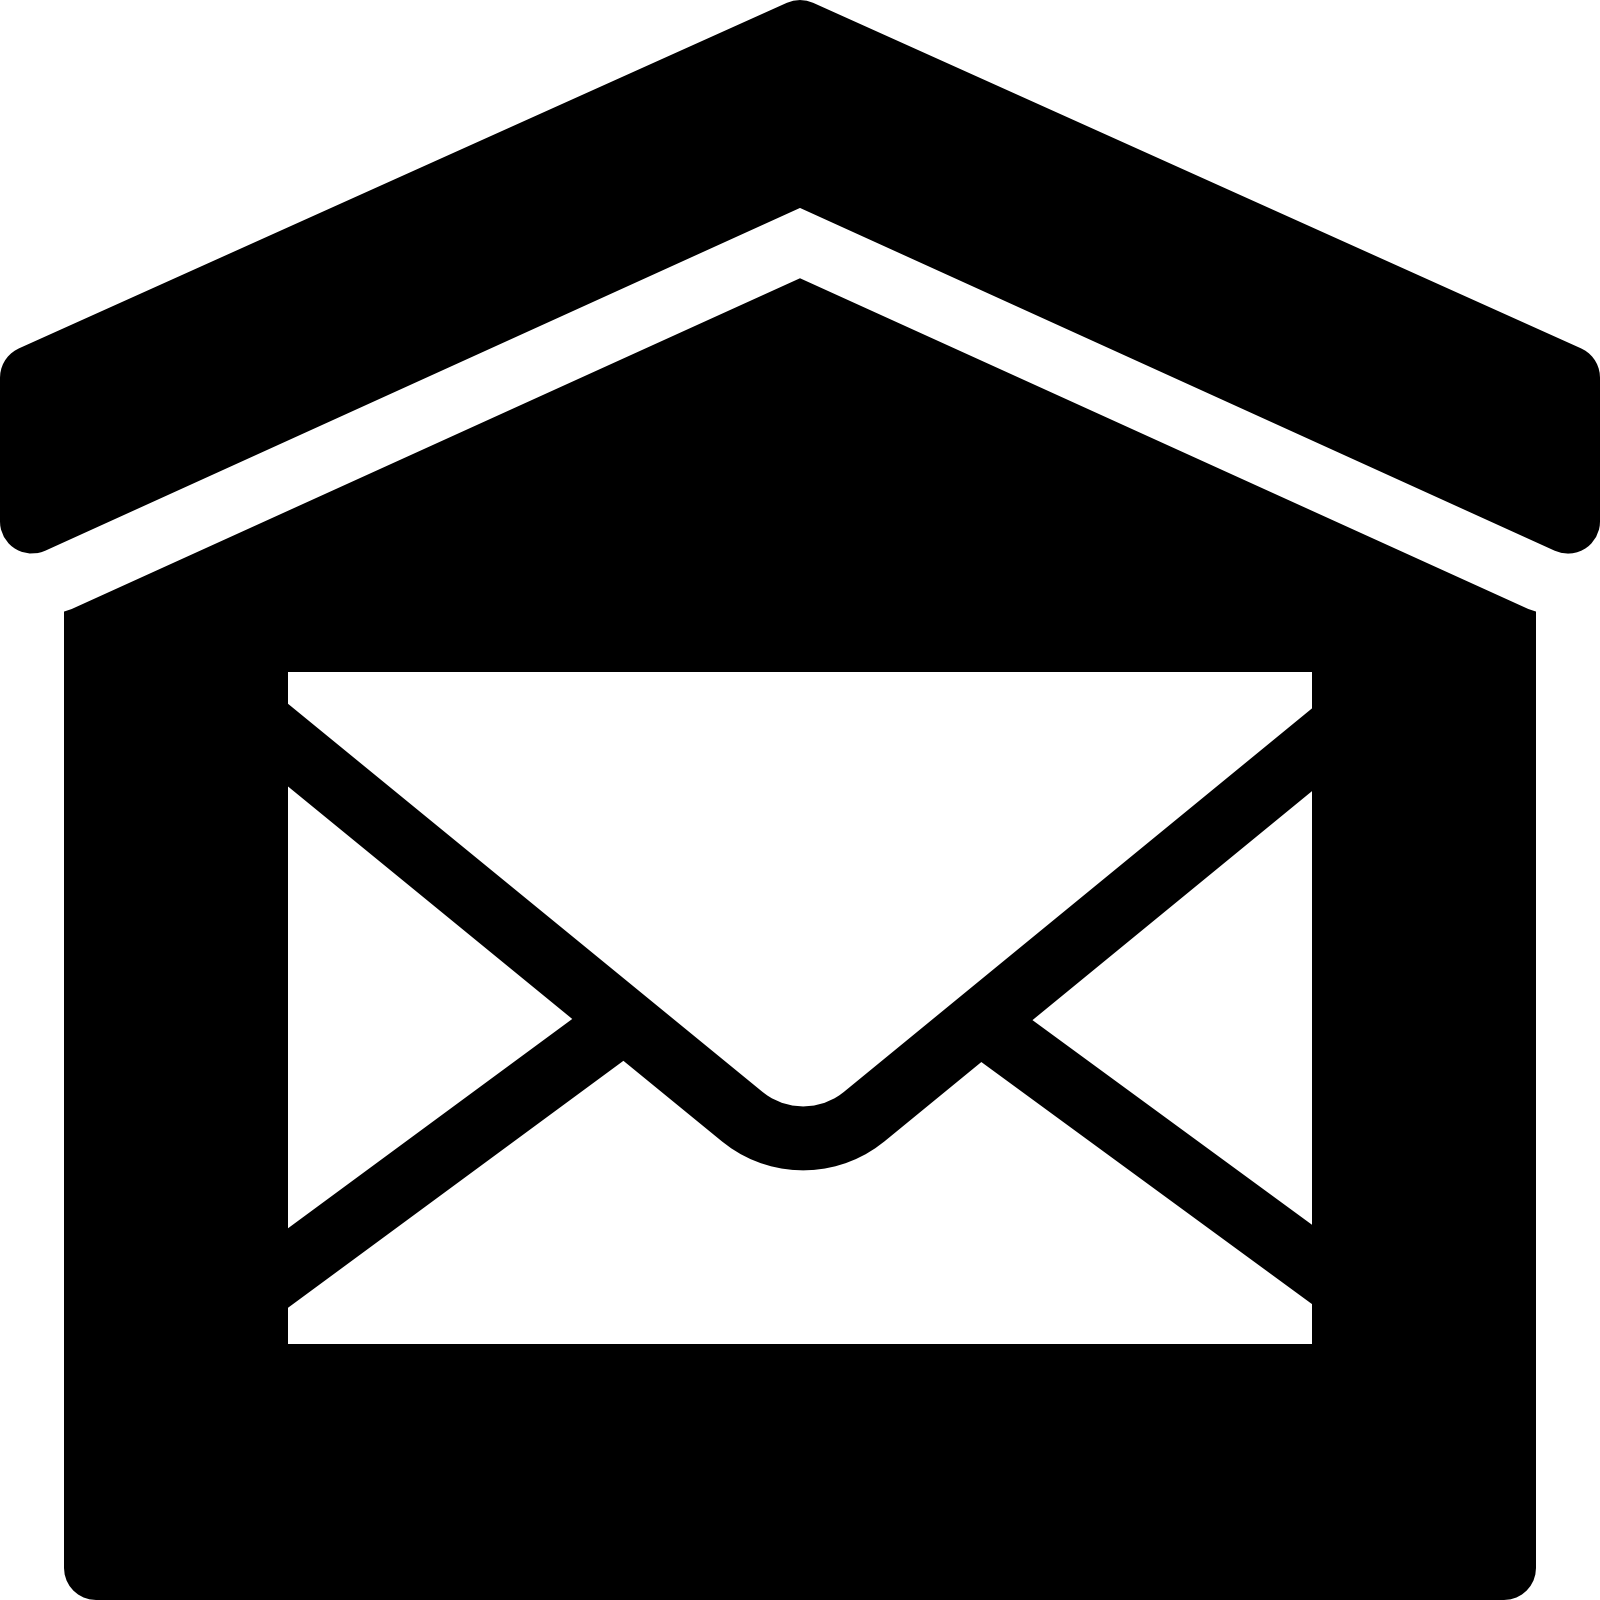 Postal Service Logo Office Logo Logo Clipart Images